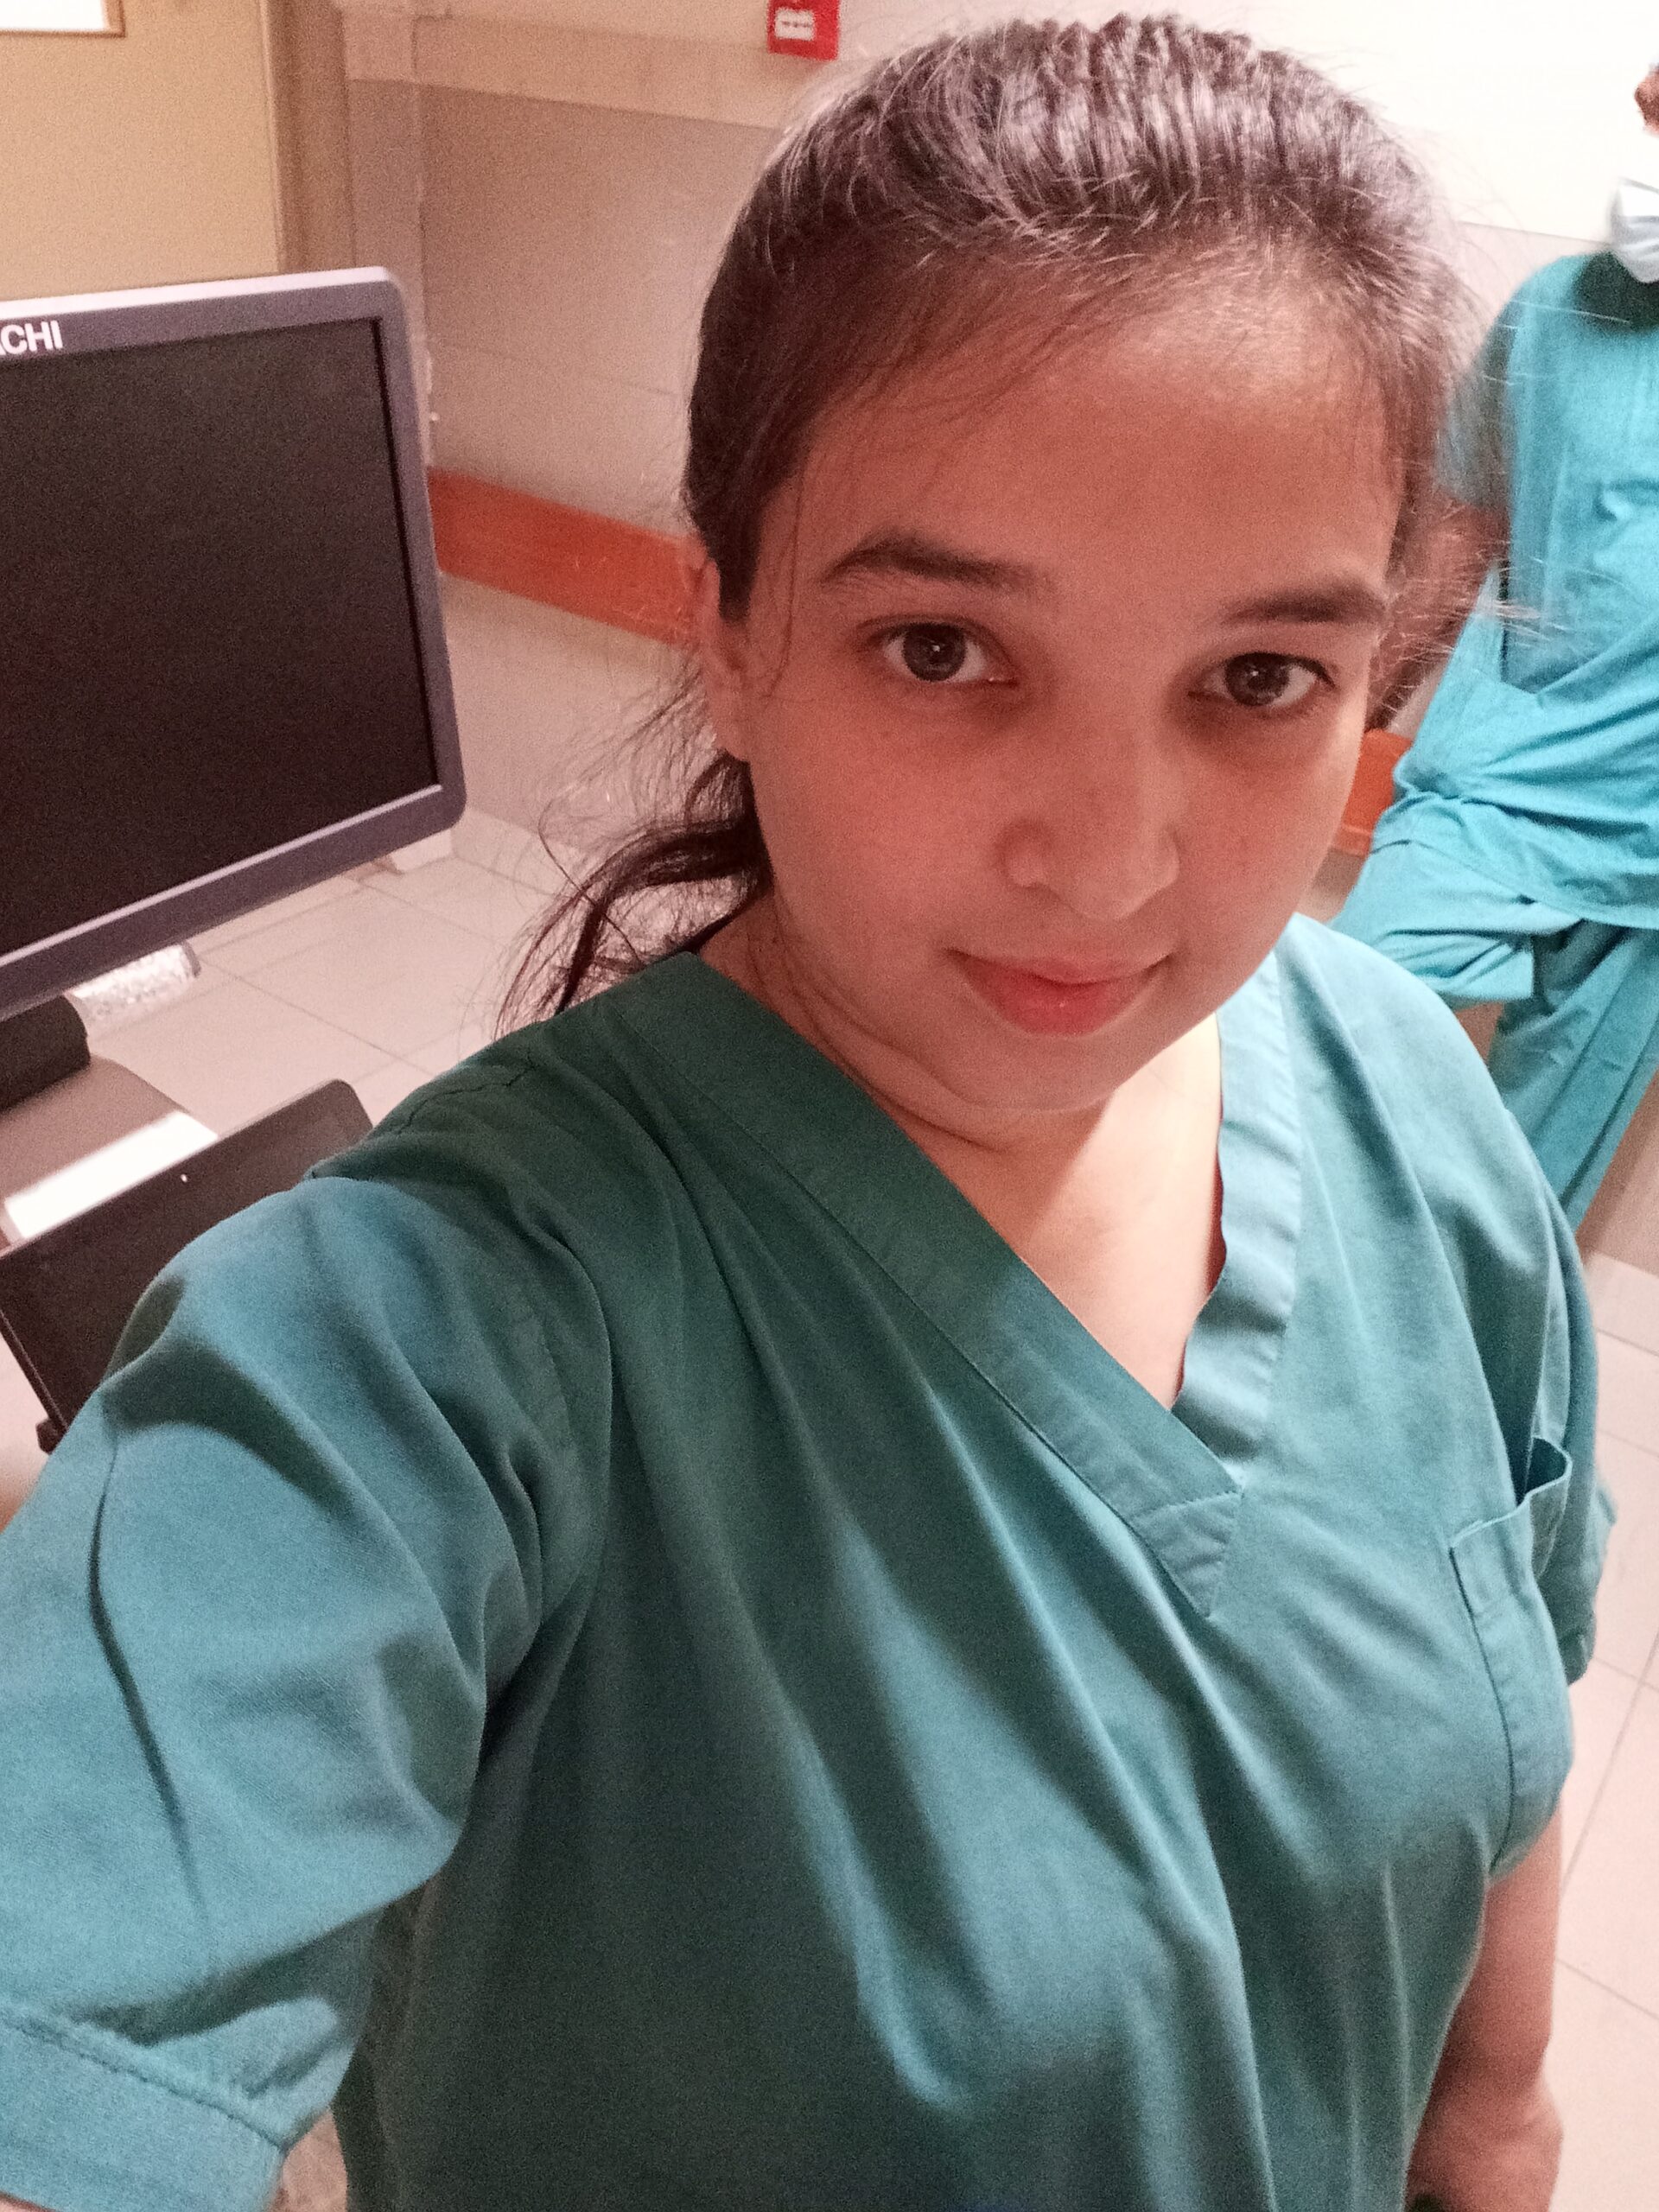 Syeda Ghazia FUJIFILM woman medical equipment engineer